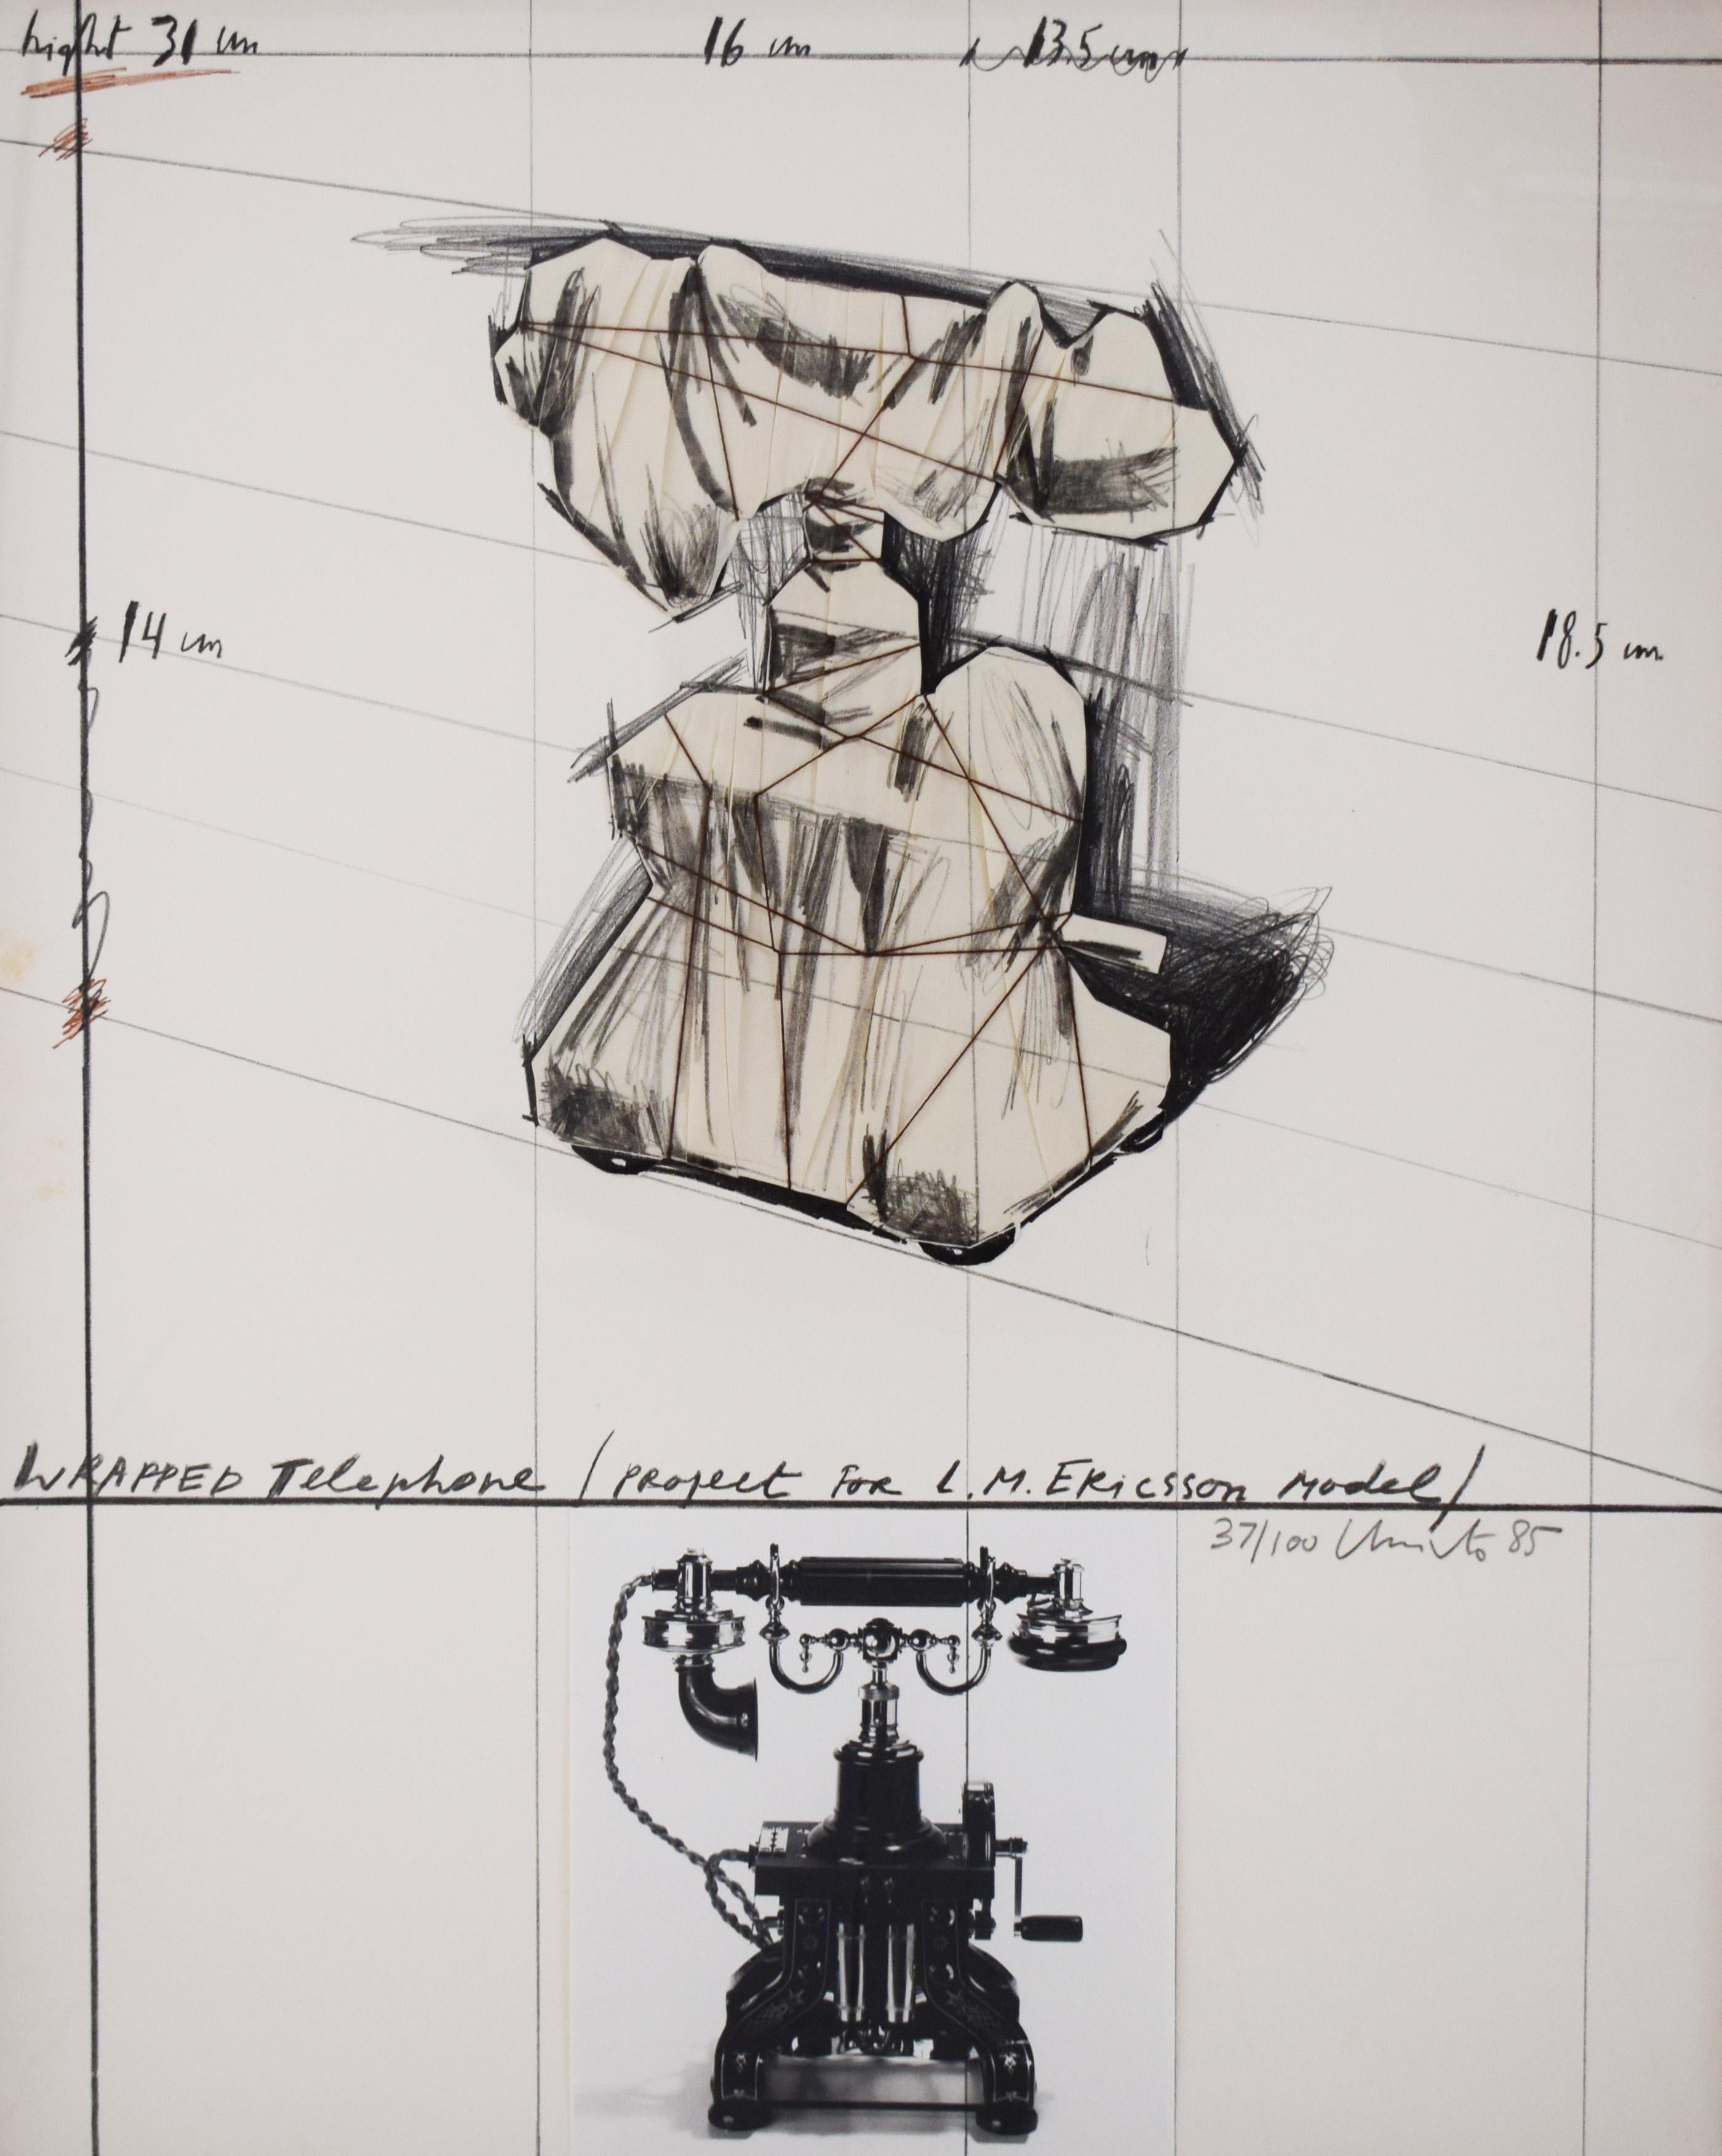 Christo Still-Life Print - Wrapped Telephone, Project for L. M. Ericsson Model - Ericsson